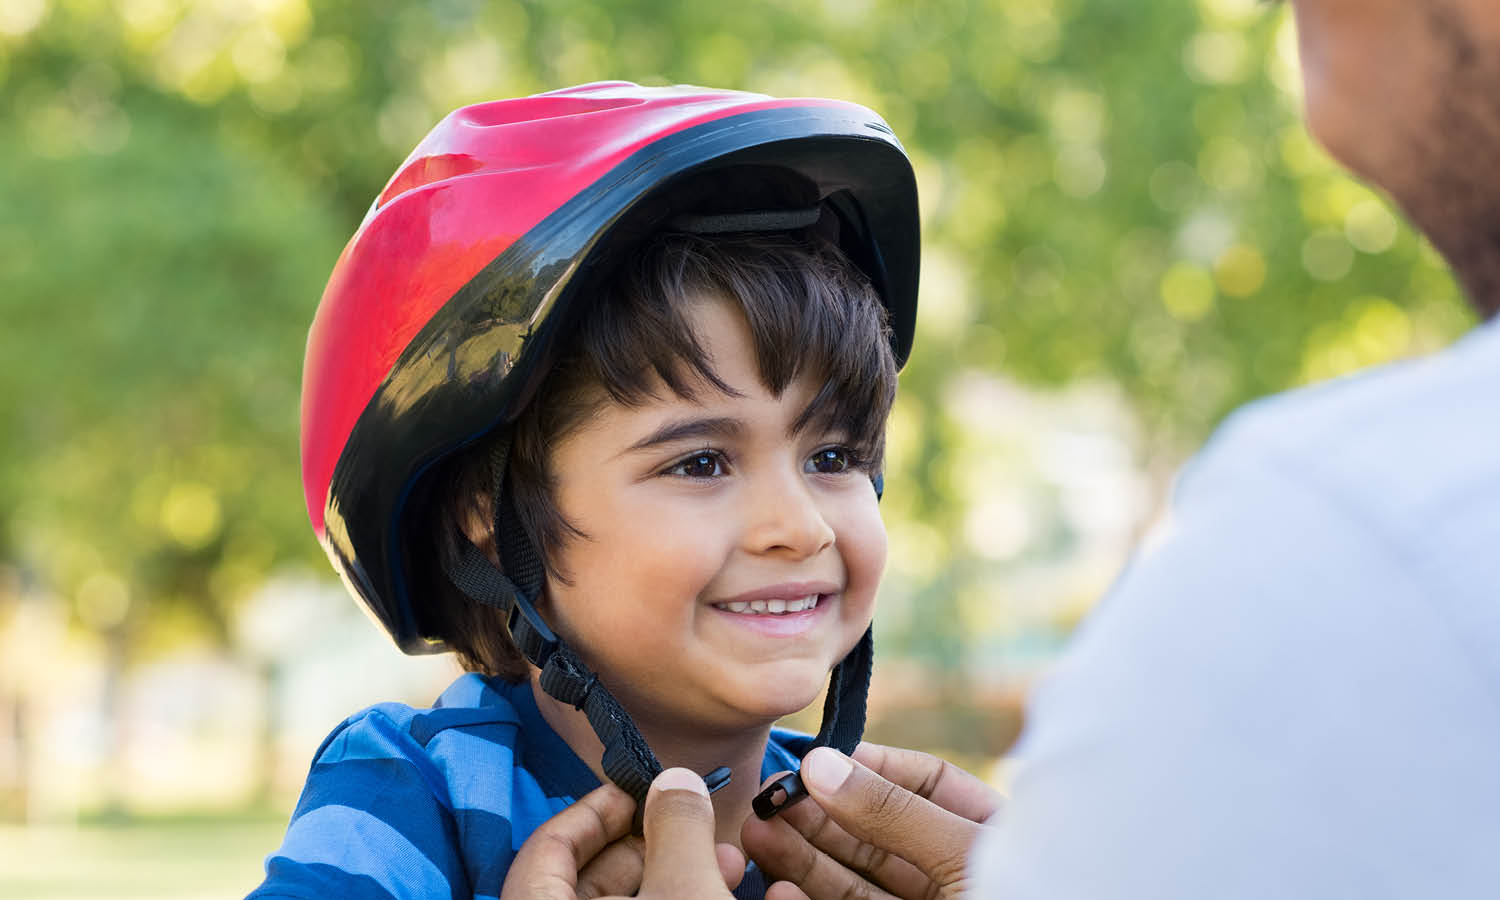 Child wearing bike helmet